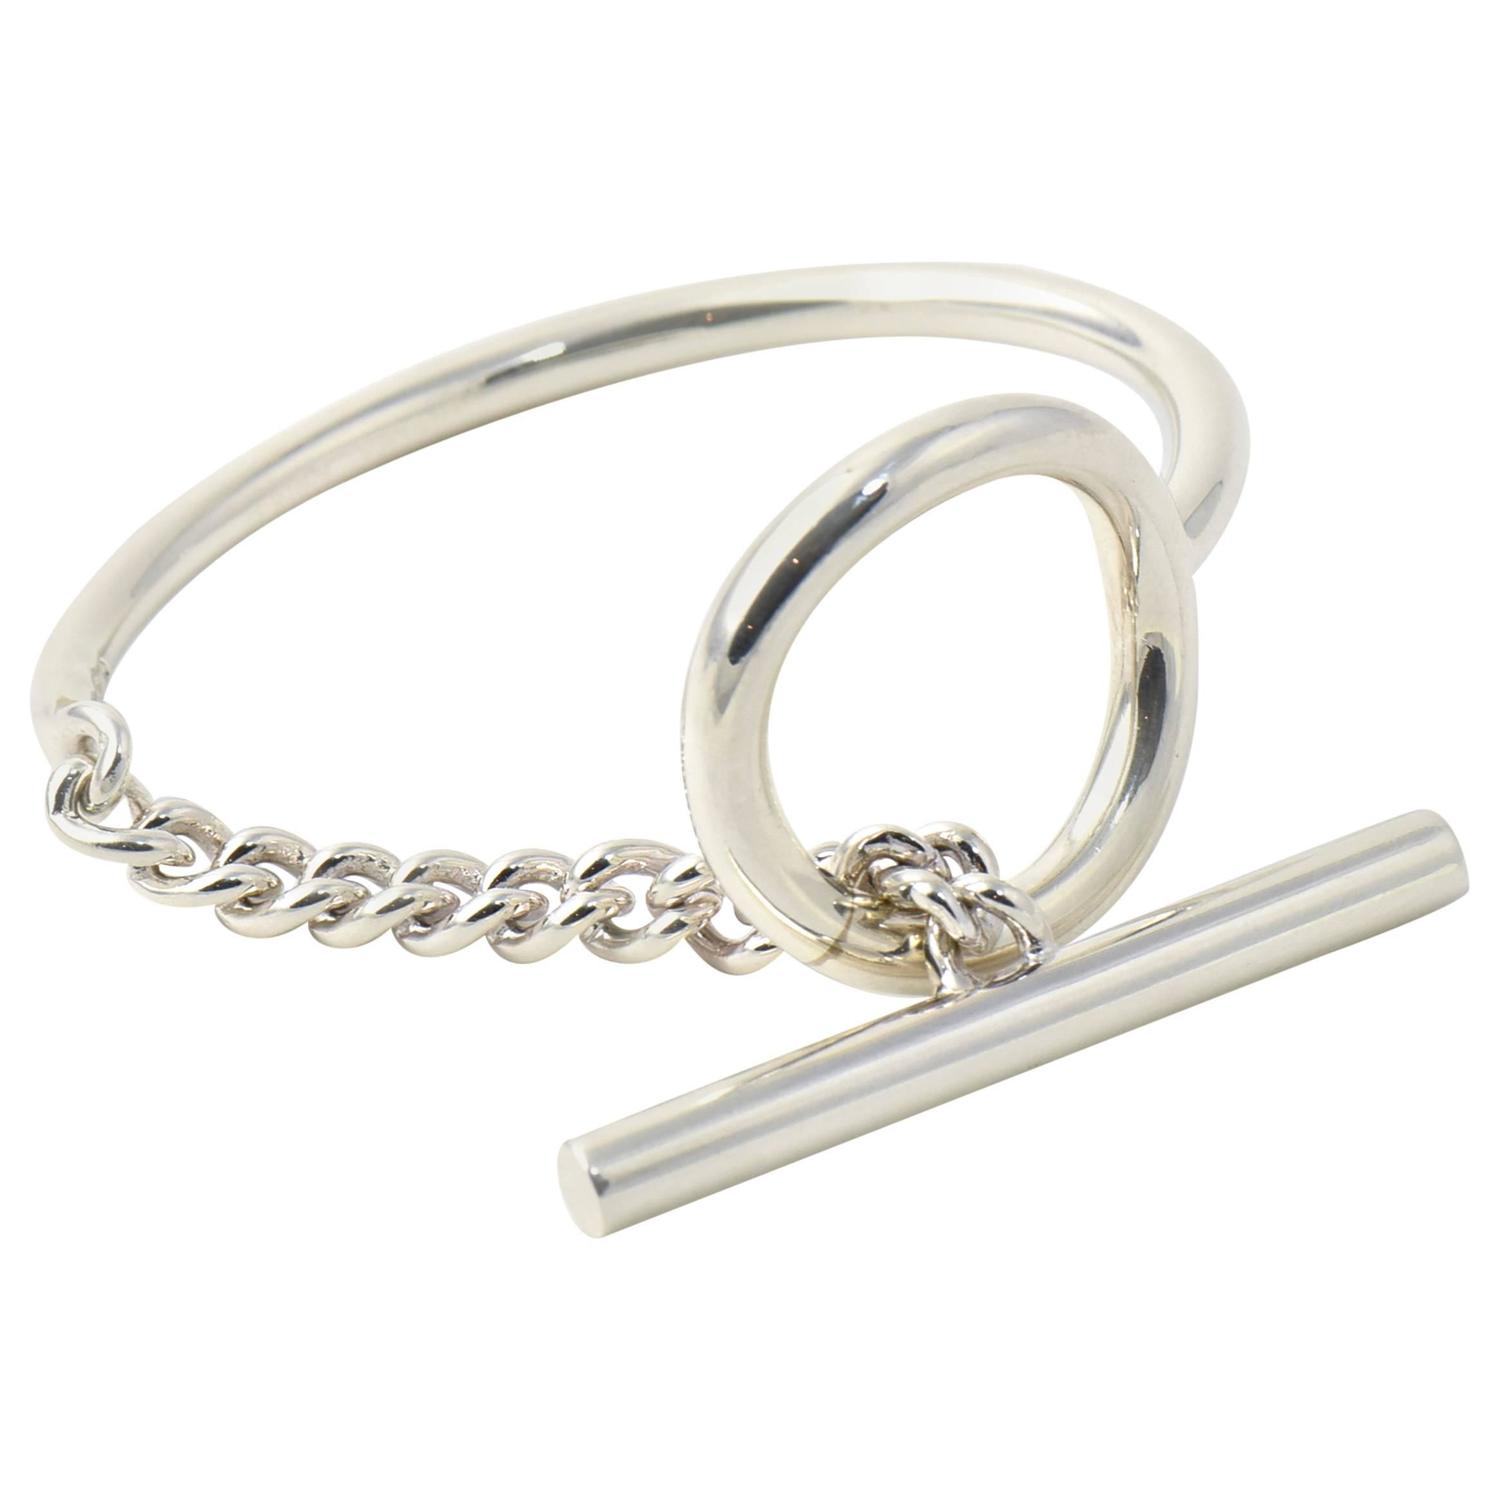 Hermes Croisette Sterling Silver Toggle Cuff Bracelet For Sale at 1stdibs